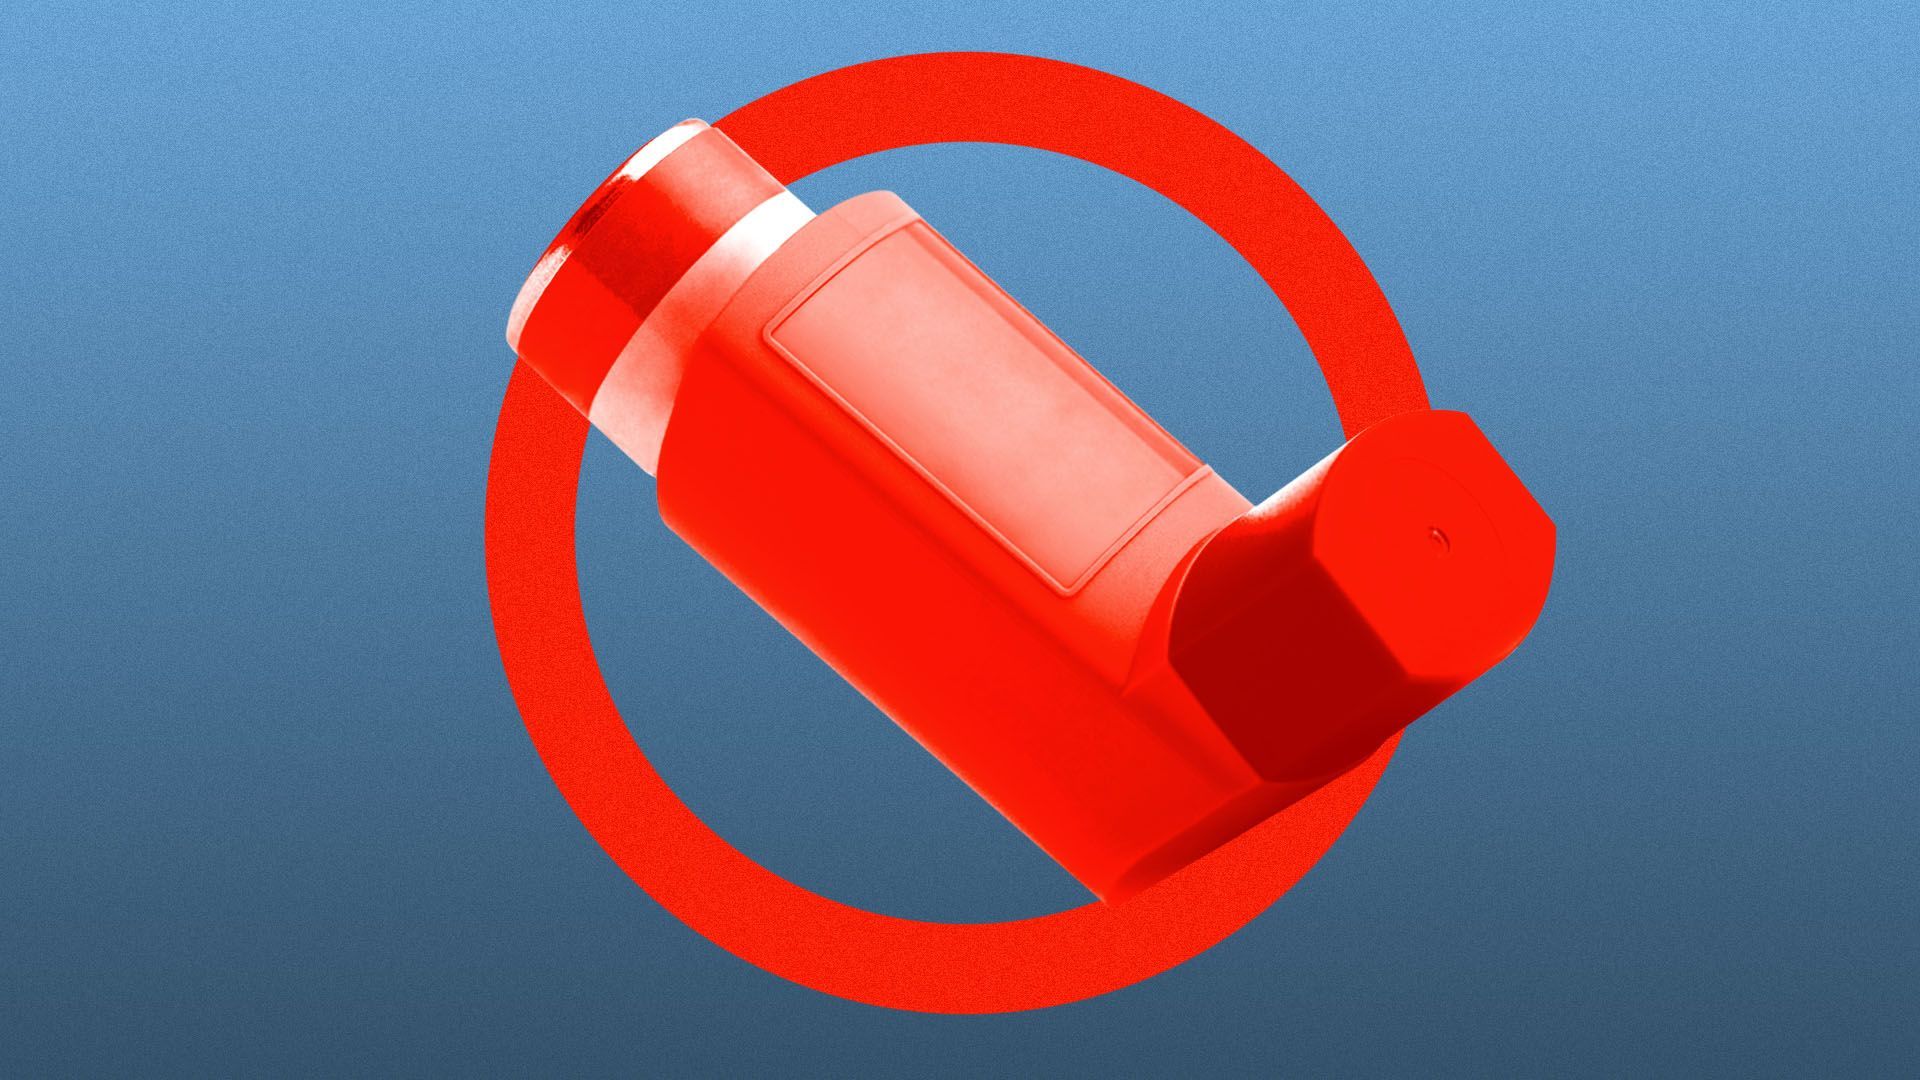 Illustration of a red inhaler in the shape of a "no" symbol